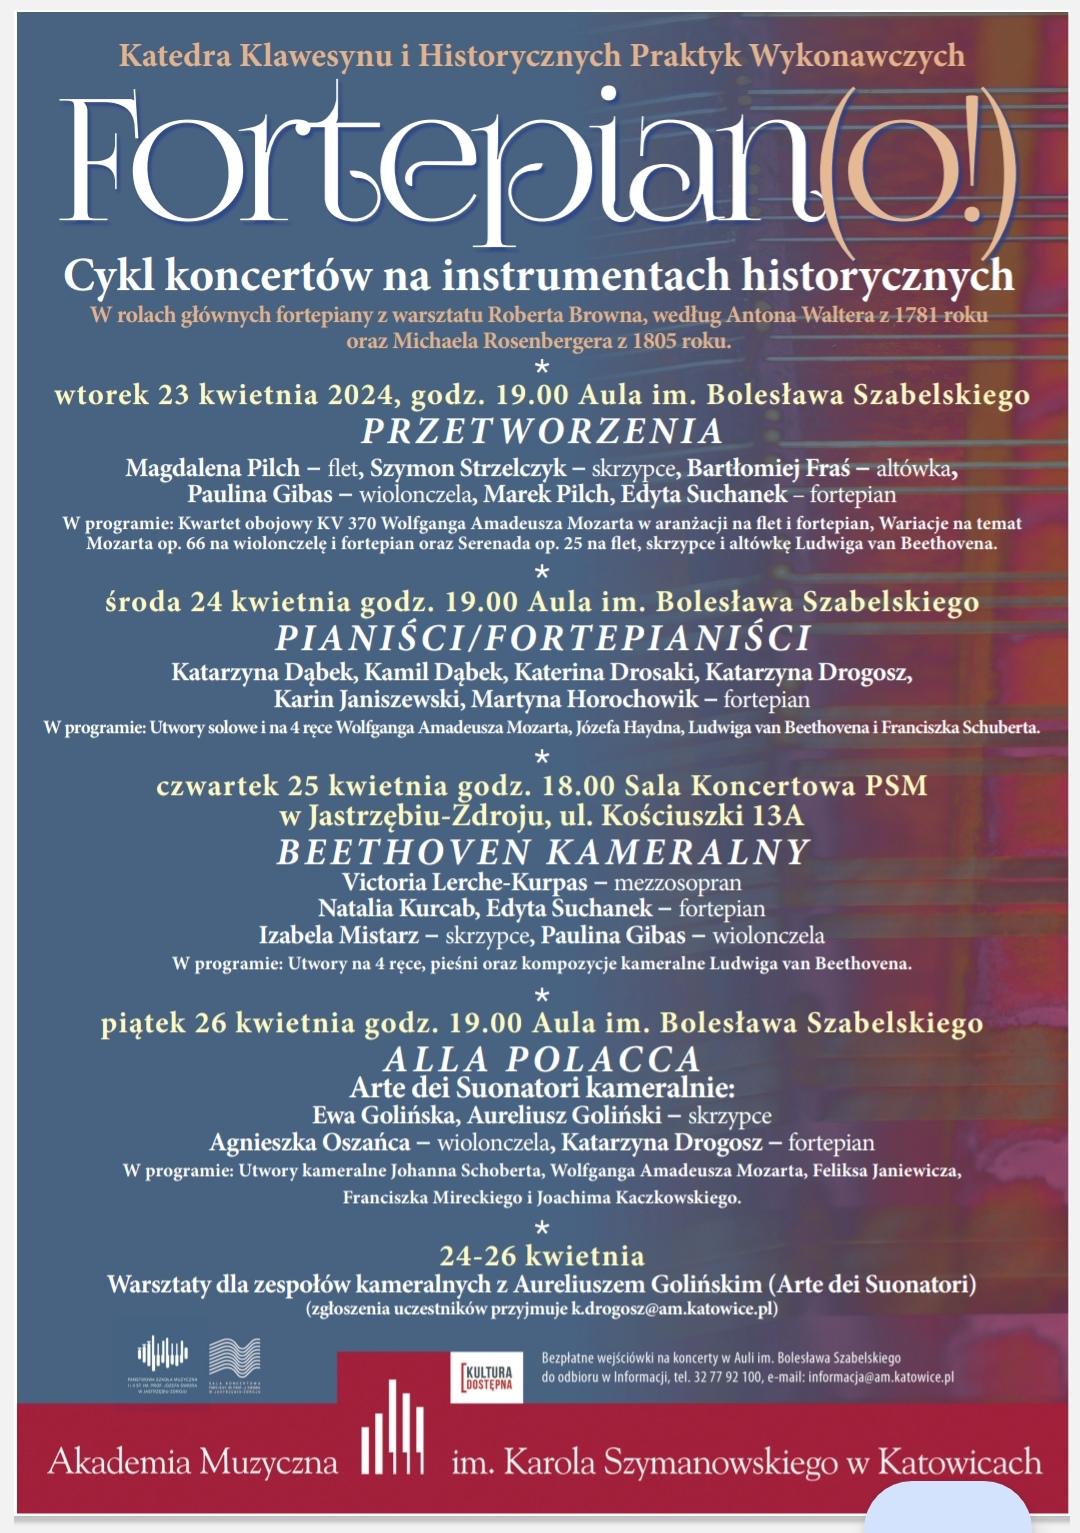 Plakat na Festiwal Fortepiano AM w Katowicach